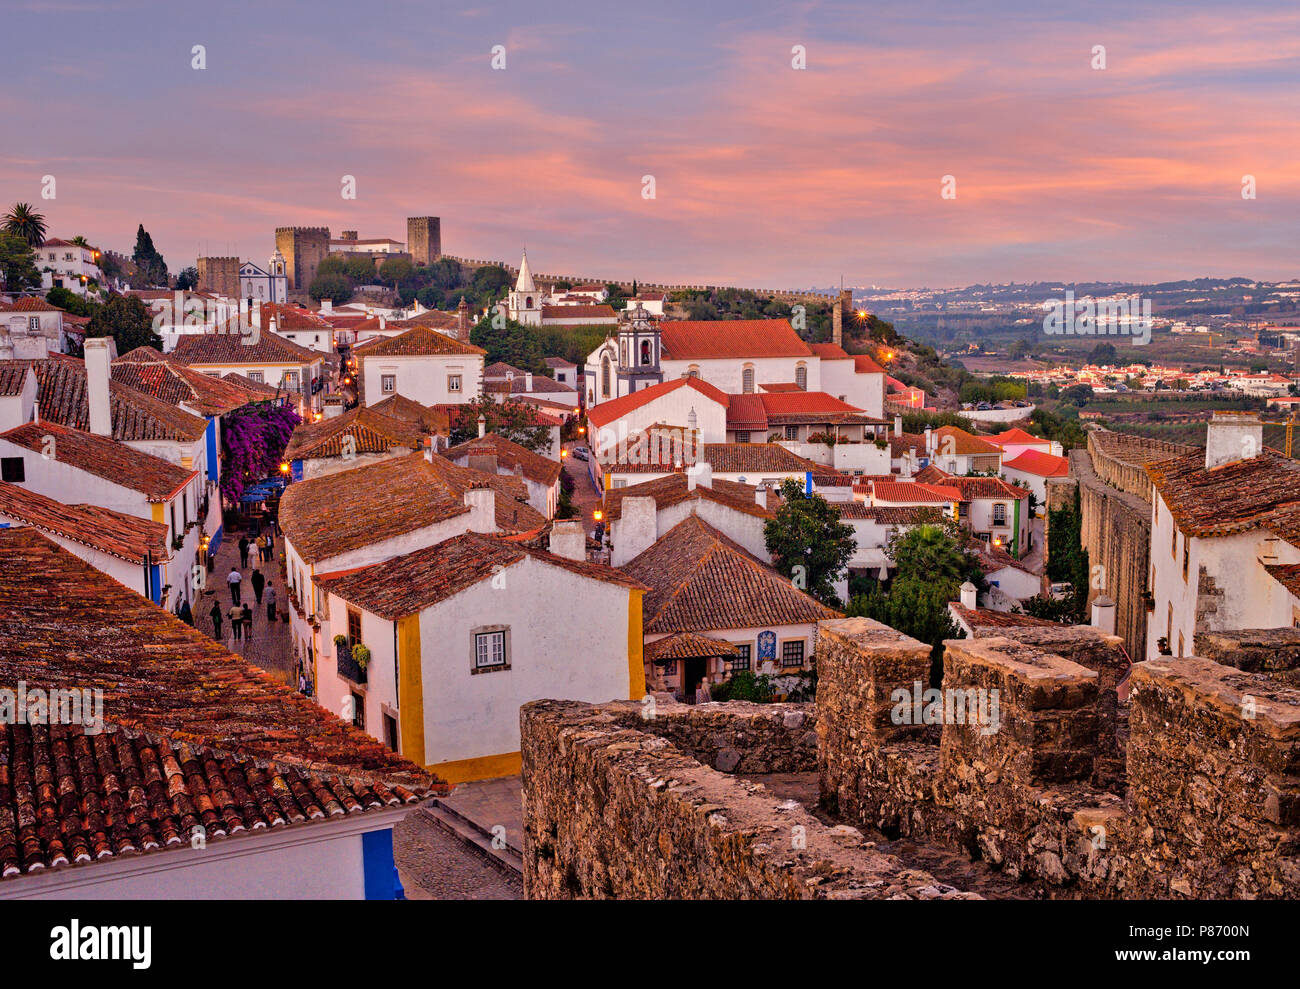 Portugal, Estremadura region, Costa da Prata, Obidos, medieval walled town, evening view of the Pousada, castle and cobbled street Stock Photo